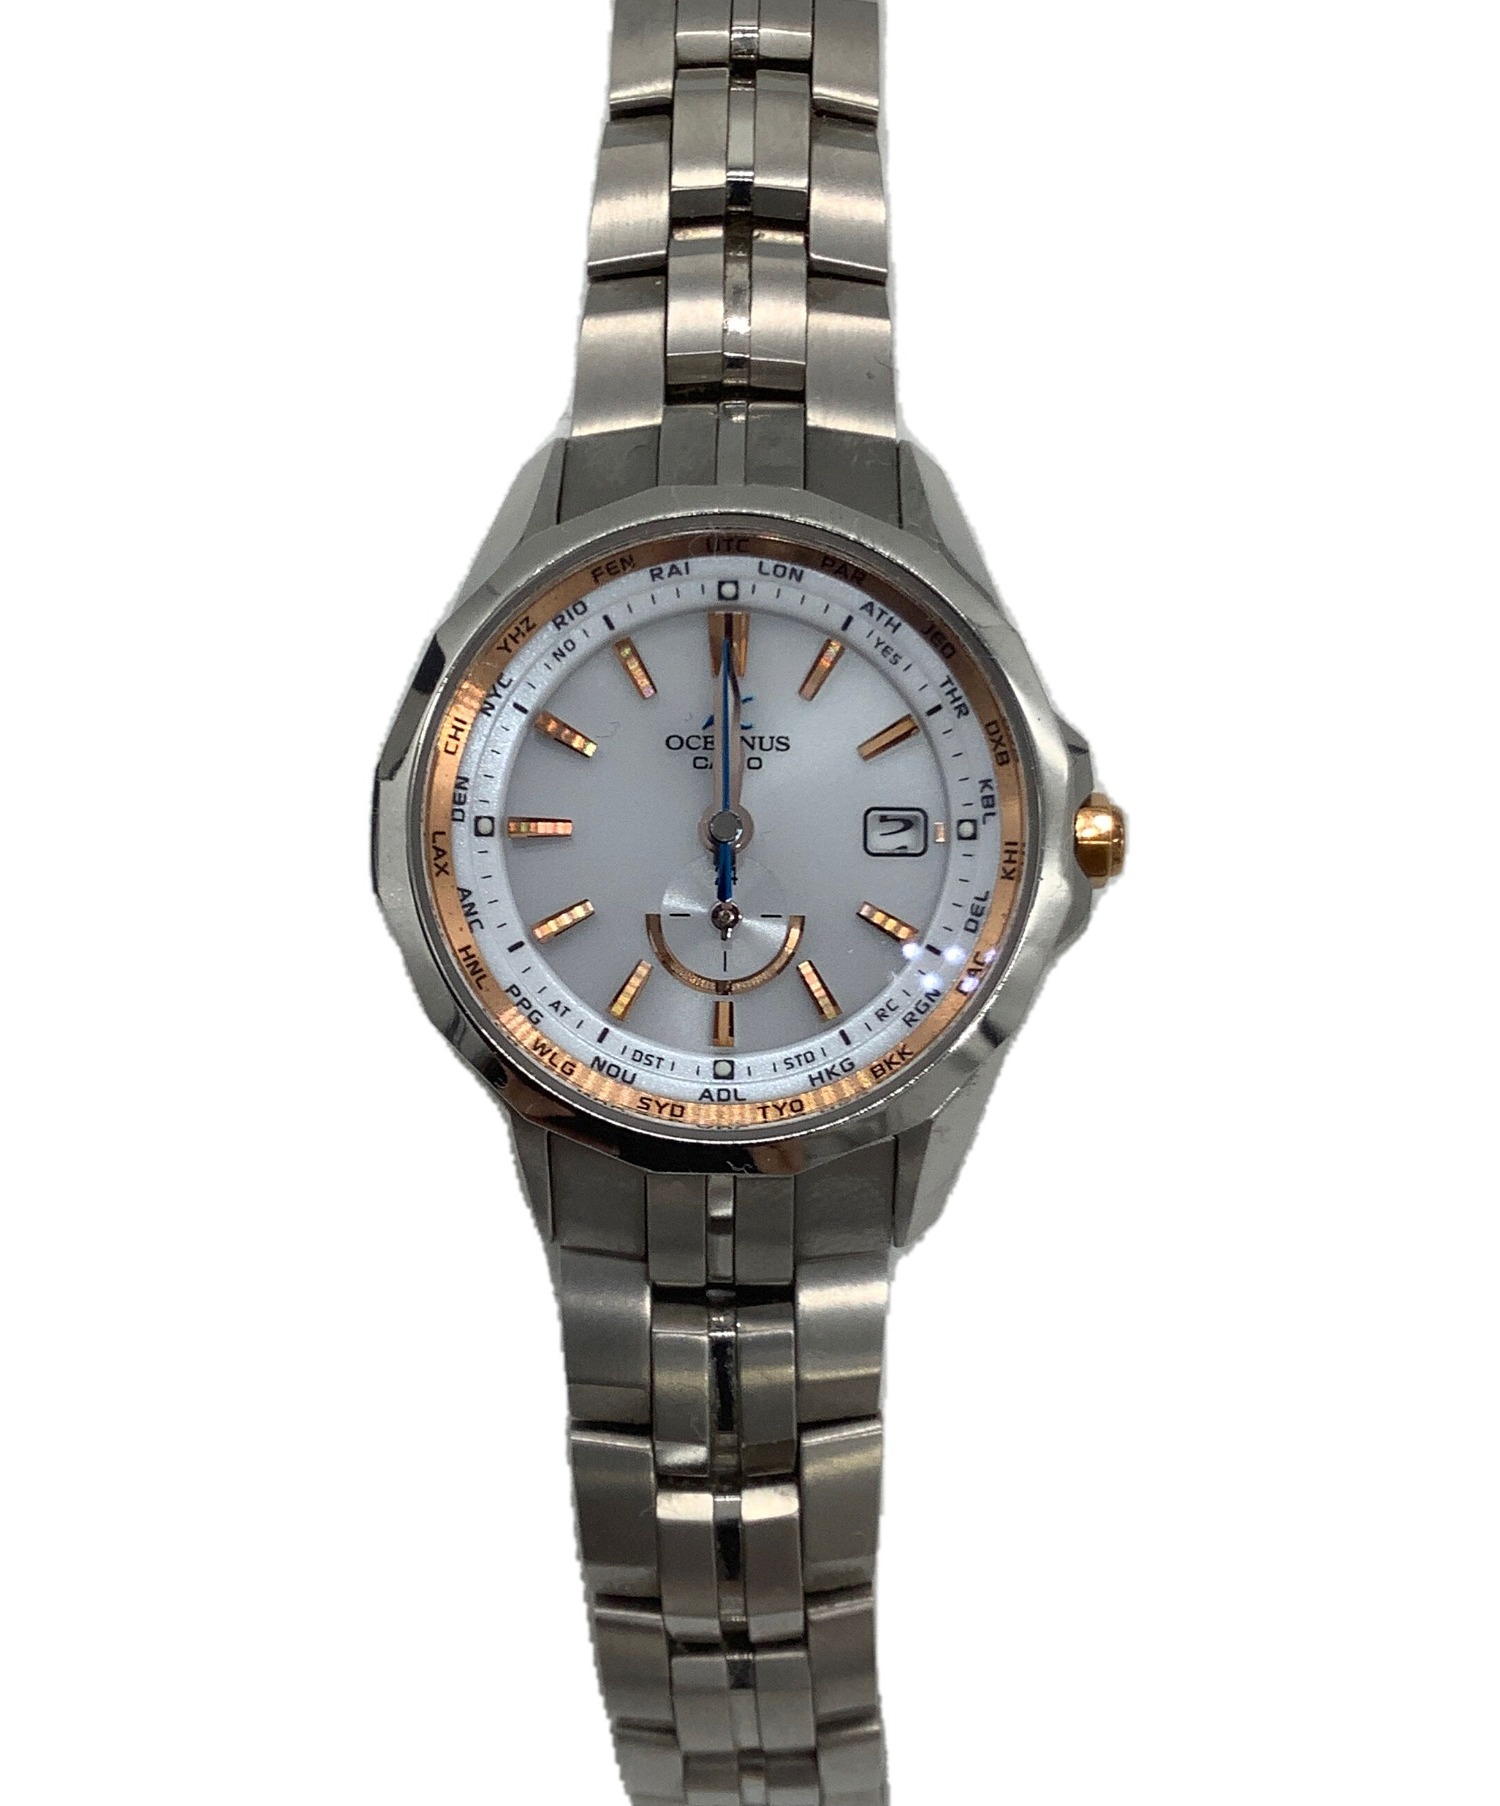 CASIO (カシオ) 腕時計 OCEANUS OCW-S340-7AJF タフソーラー